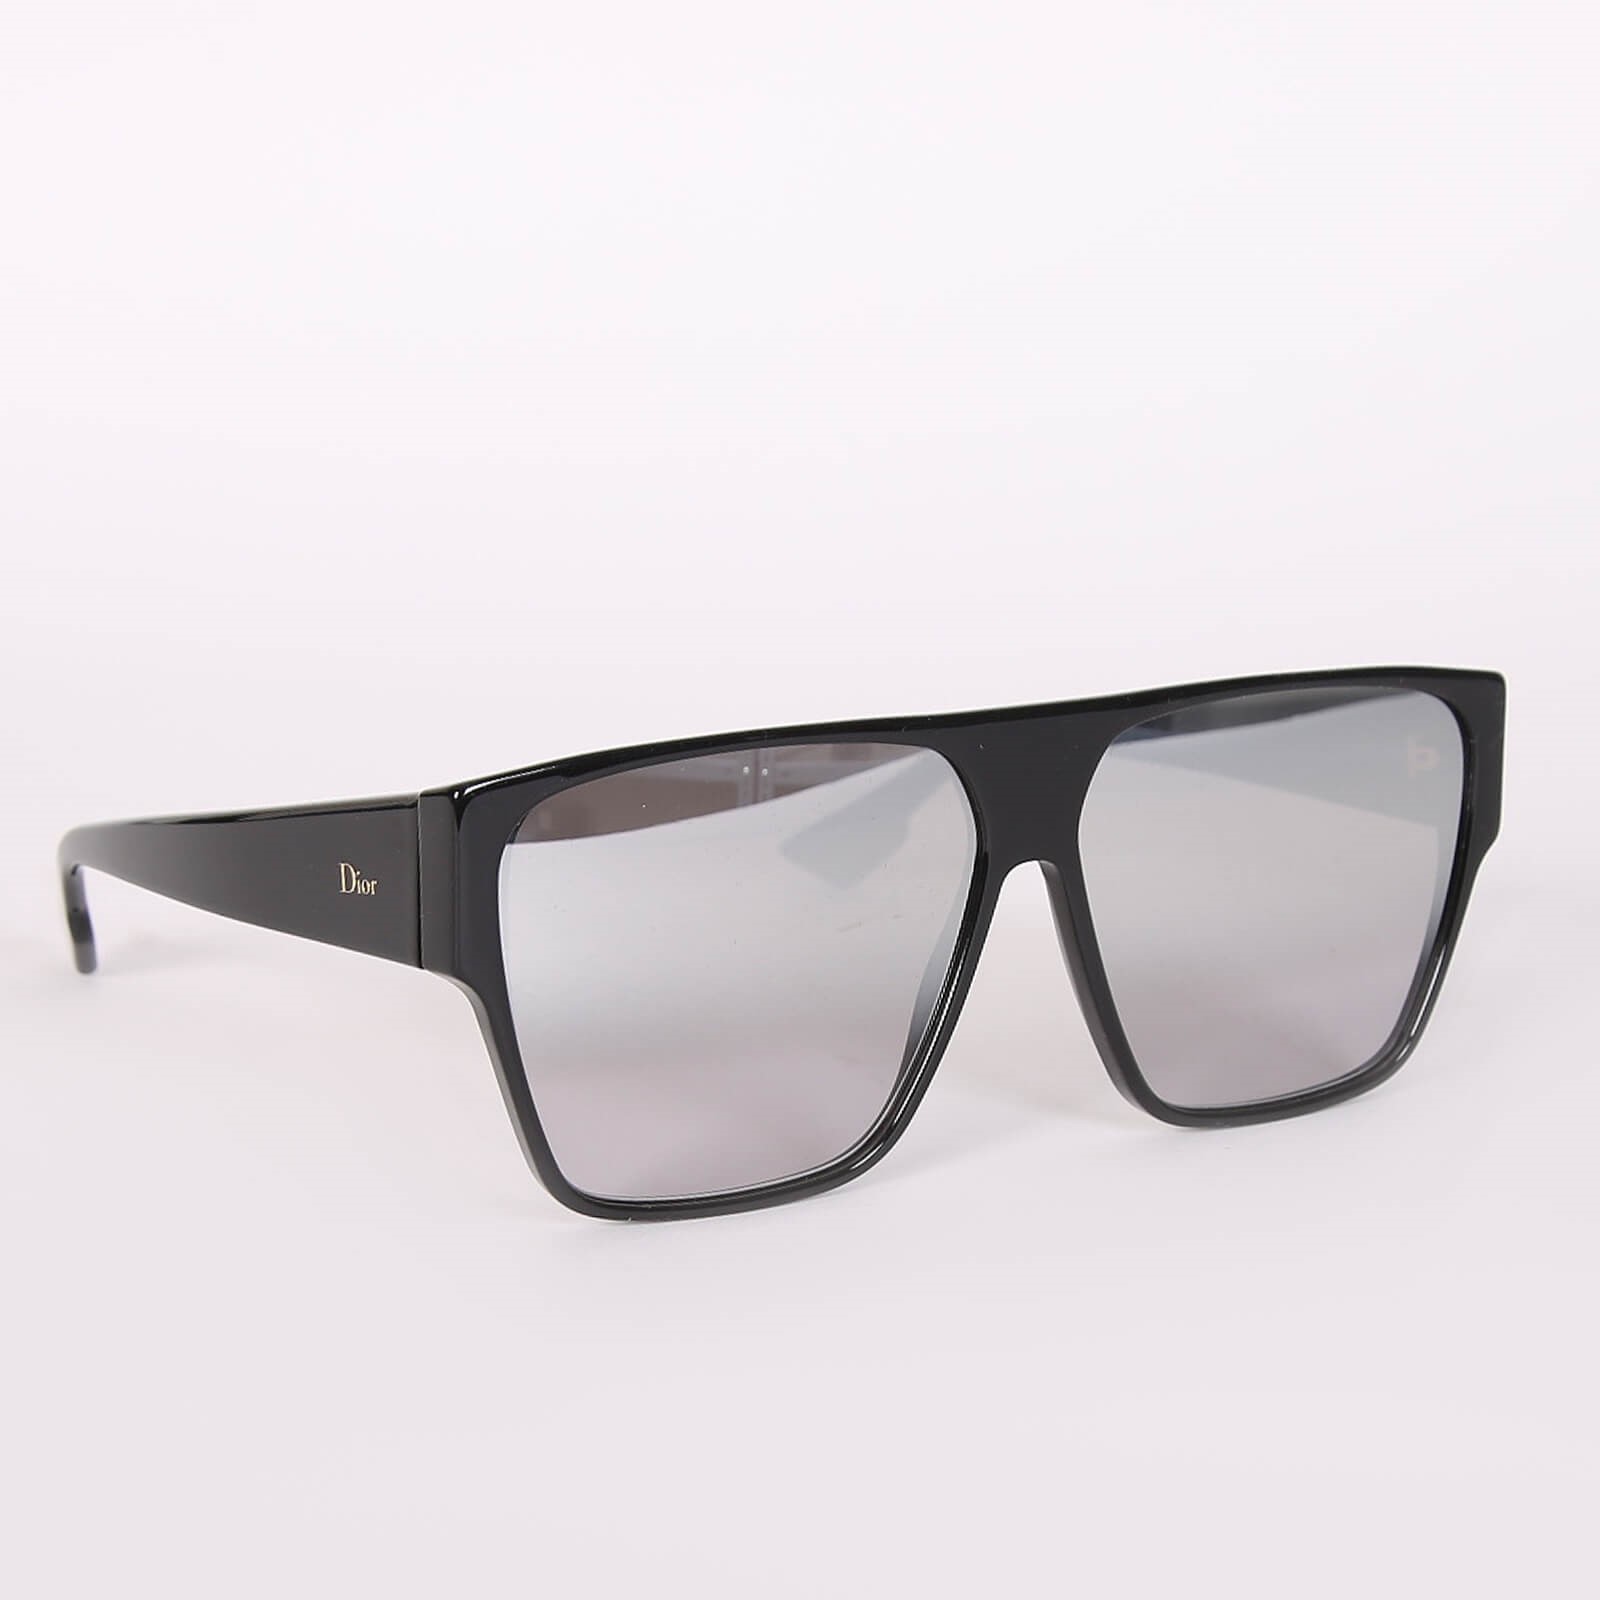 ASOS DESIGN bevel square sunglasses with mirror lens in silver | ASOS